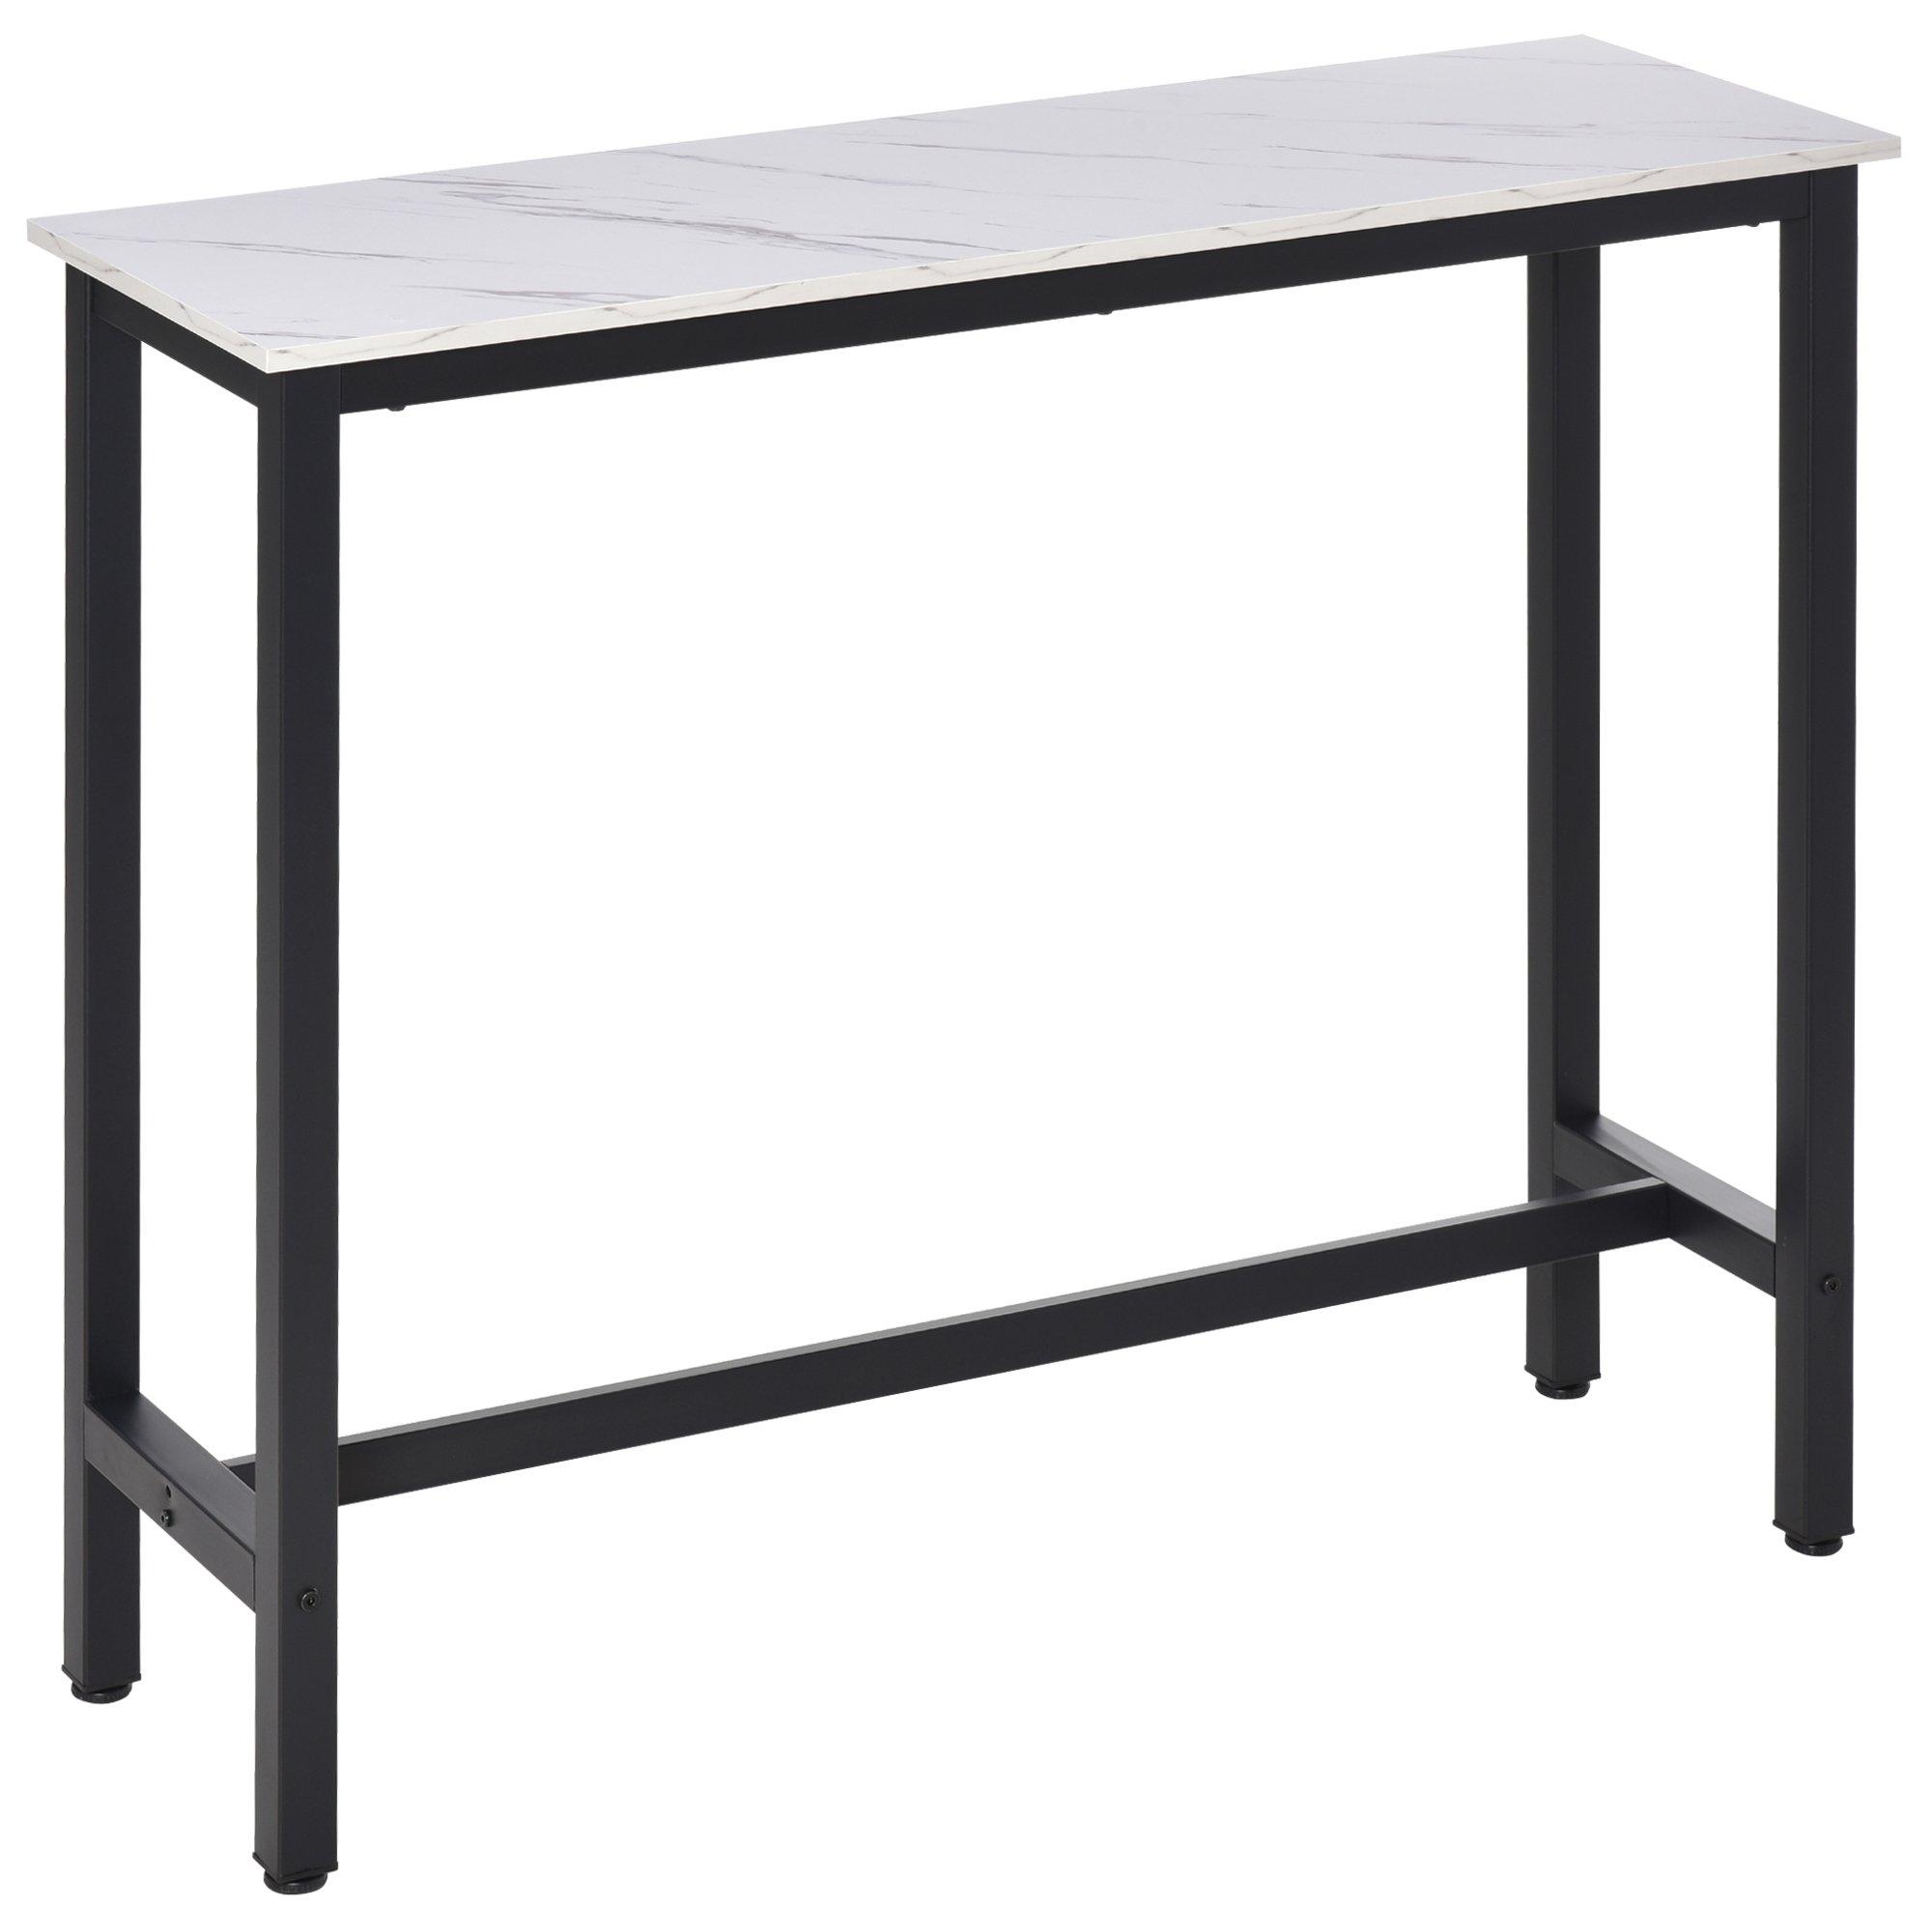 Homcom Bar Table with Adjustable Pads Black, White